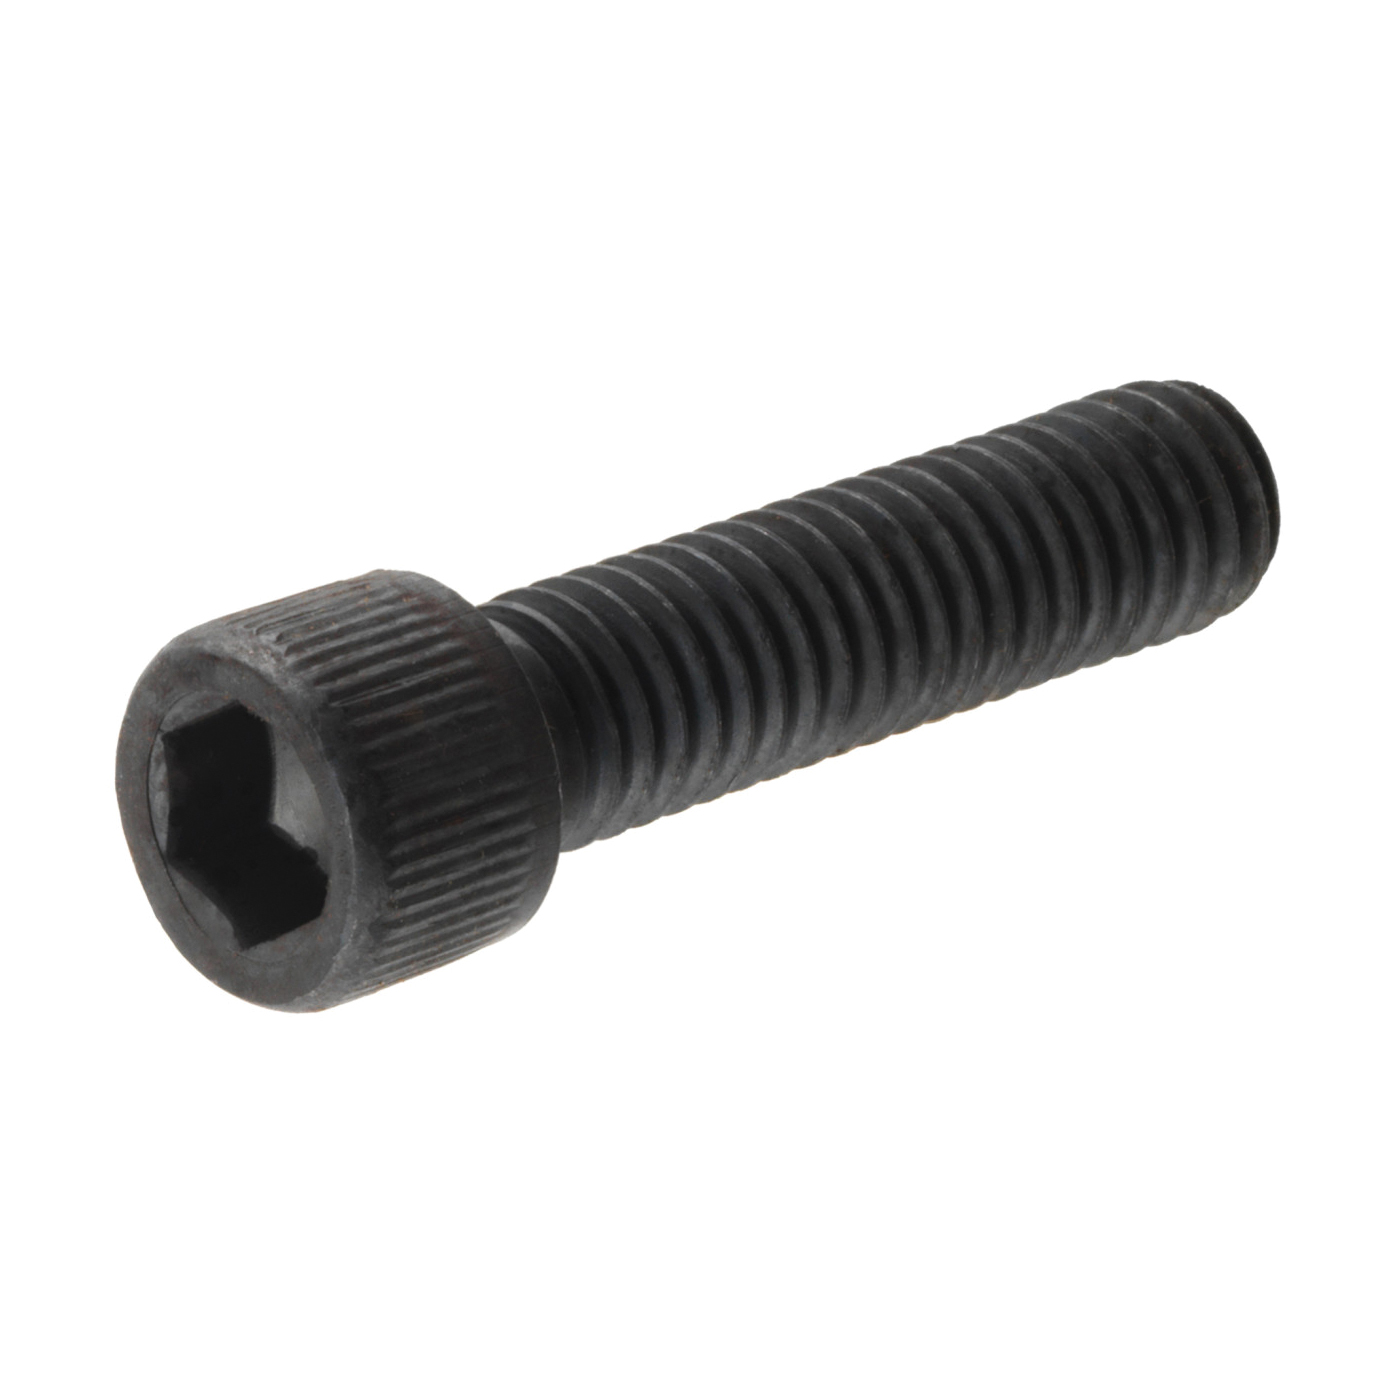 880323 Screw, 5/16-16 Thread, 1-1/2 in L, Coarse Thread, Socket Drive, Blunt Point, Steel, Black Phosphate, 2 PK